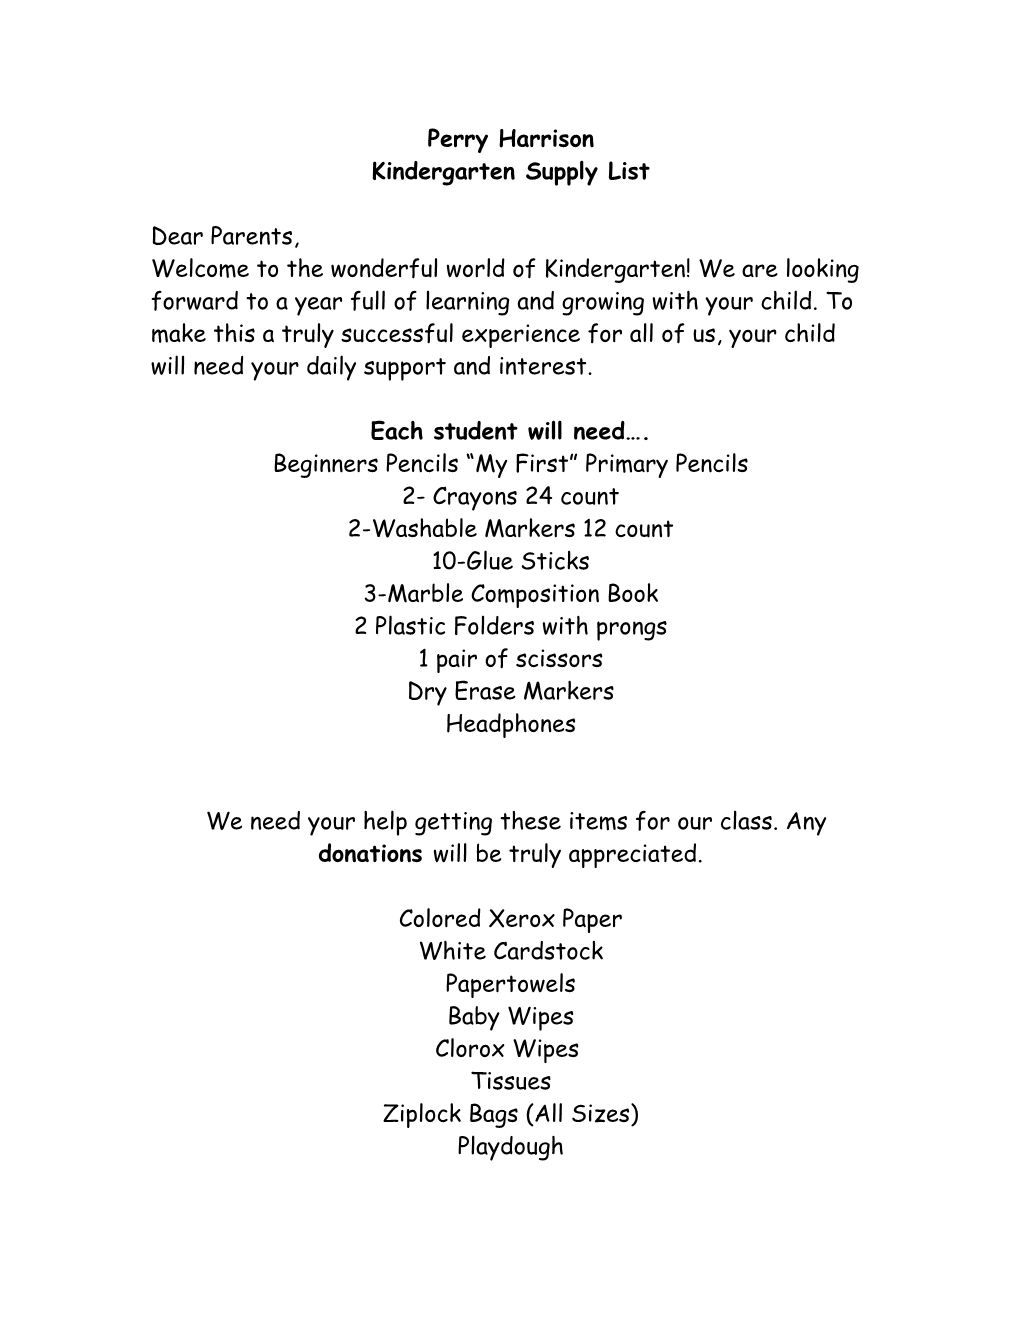 Kindergarten Supply List s4